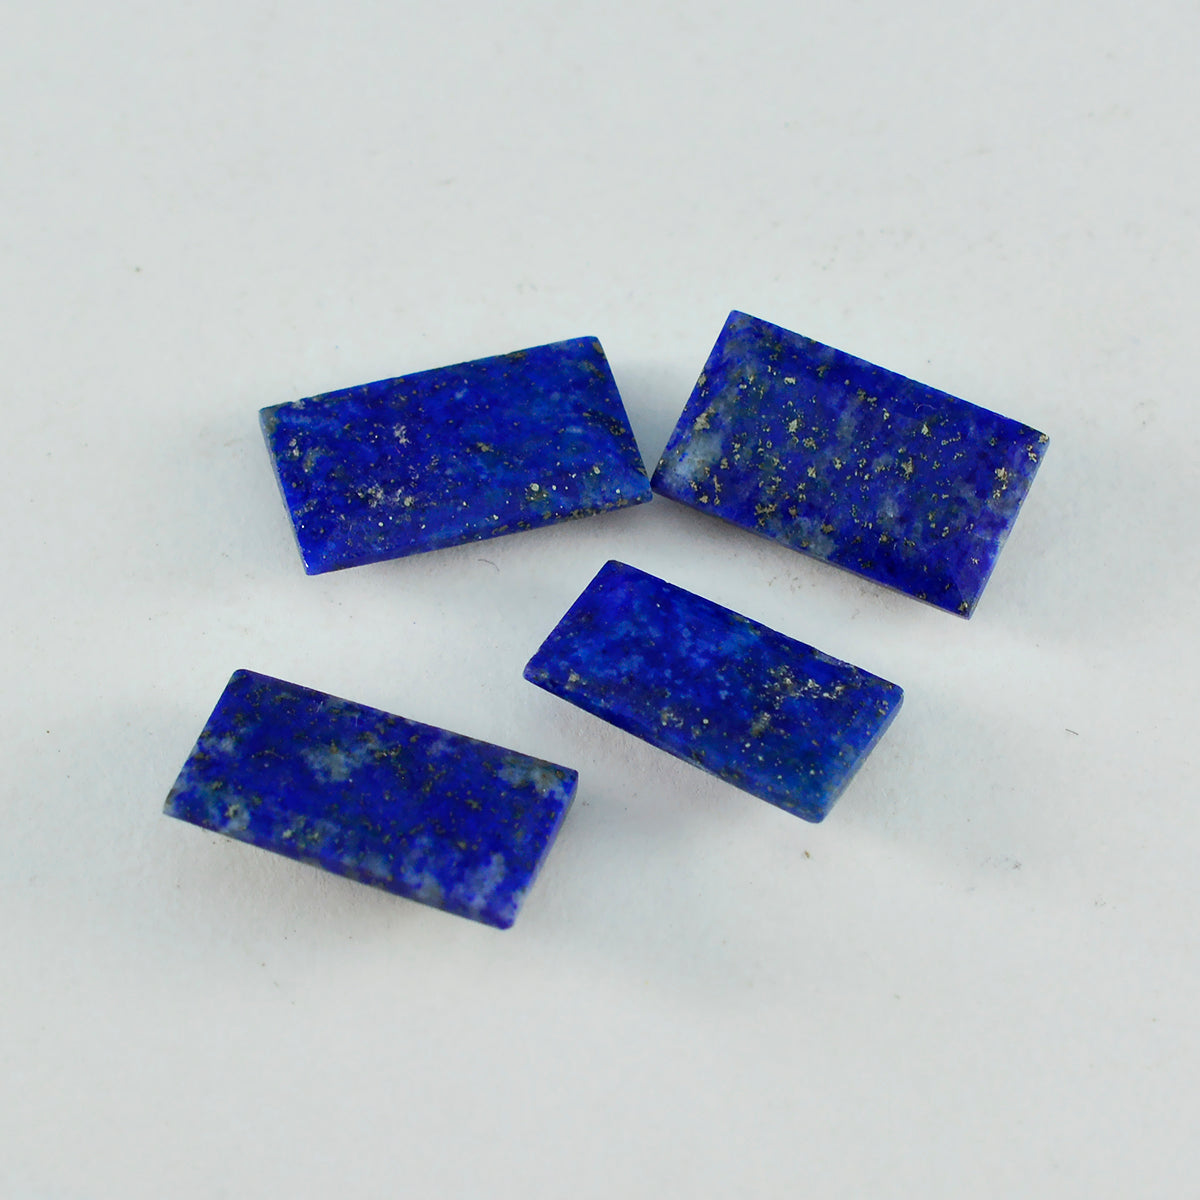 Riyogems, 1 pieza, lapislázuli azul auténtico facetado, forma de baguette de 5x10mm, Gema de calidad fantástica